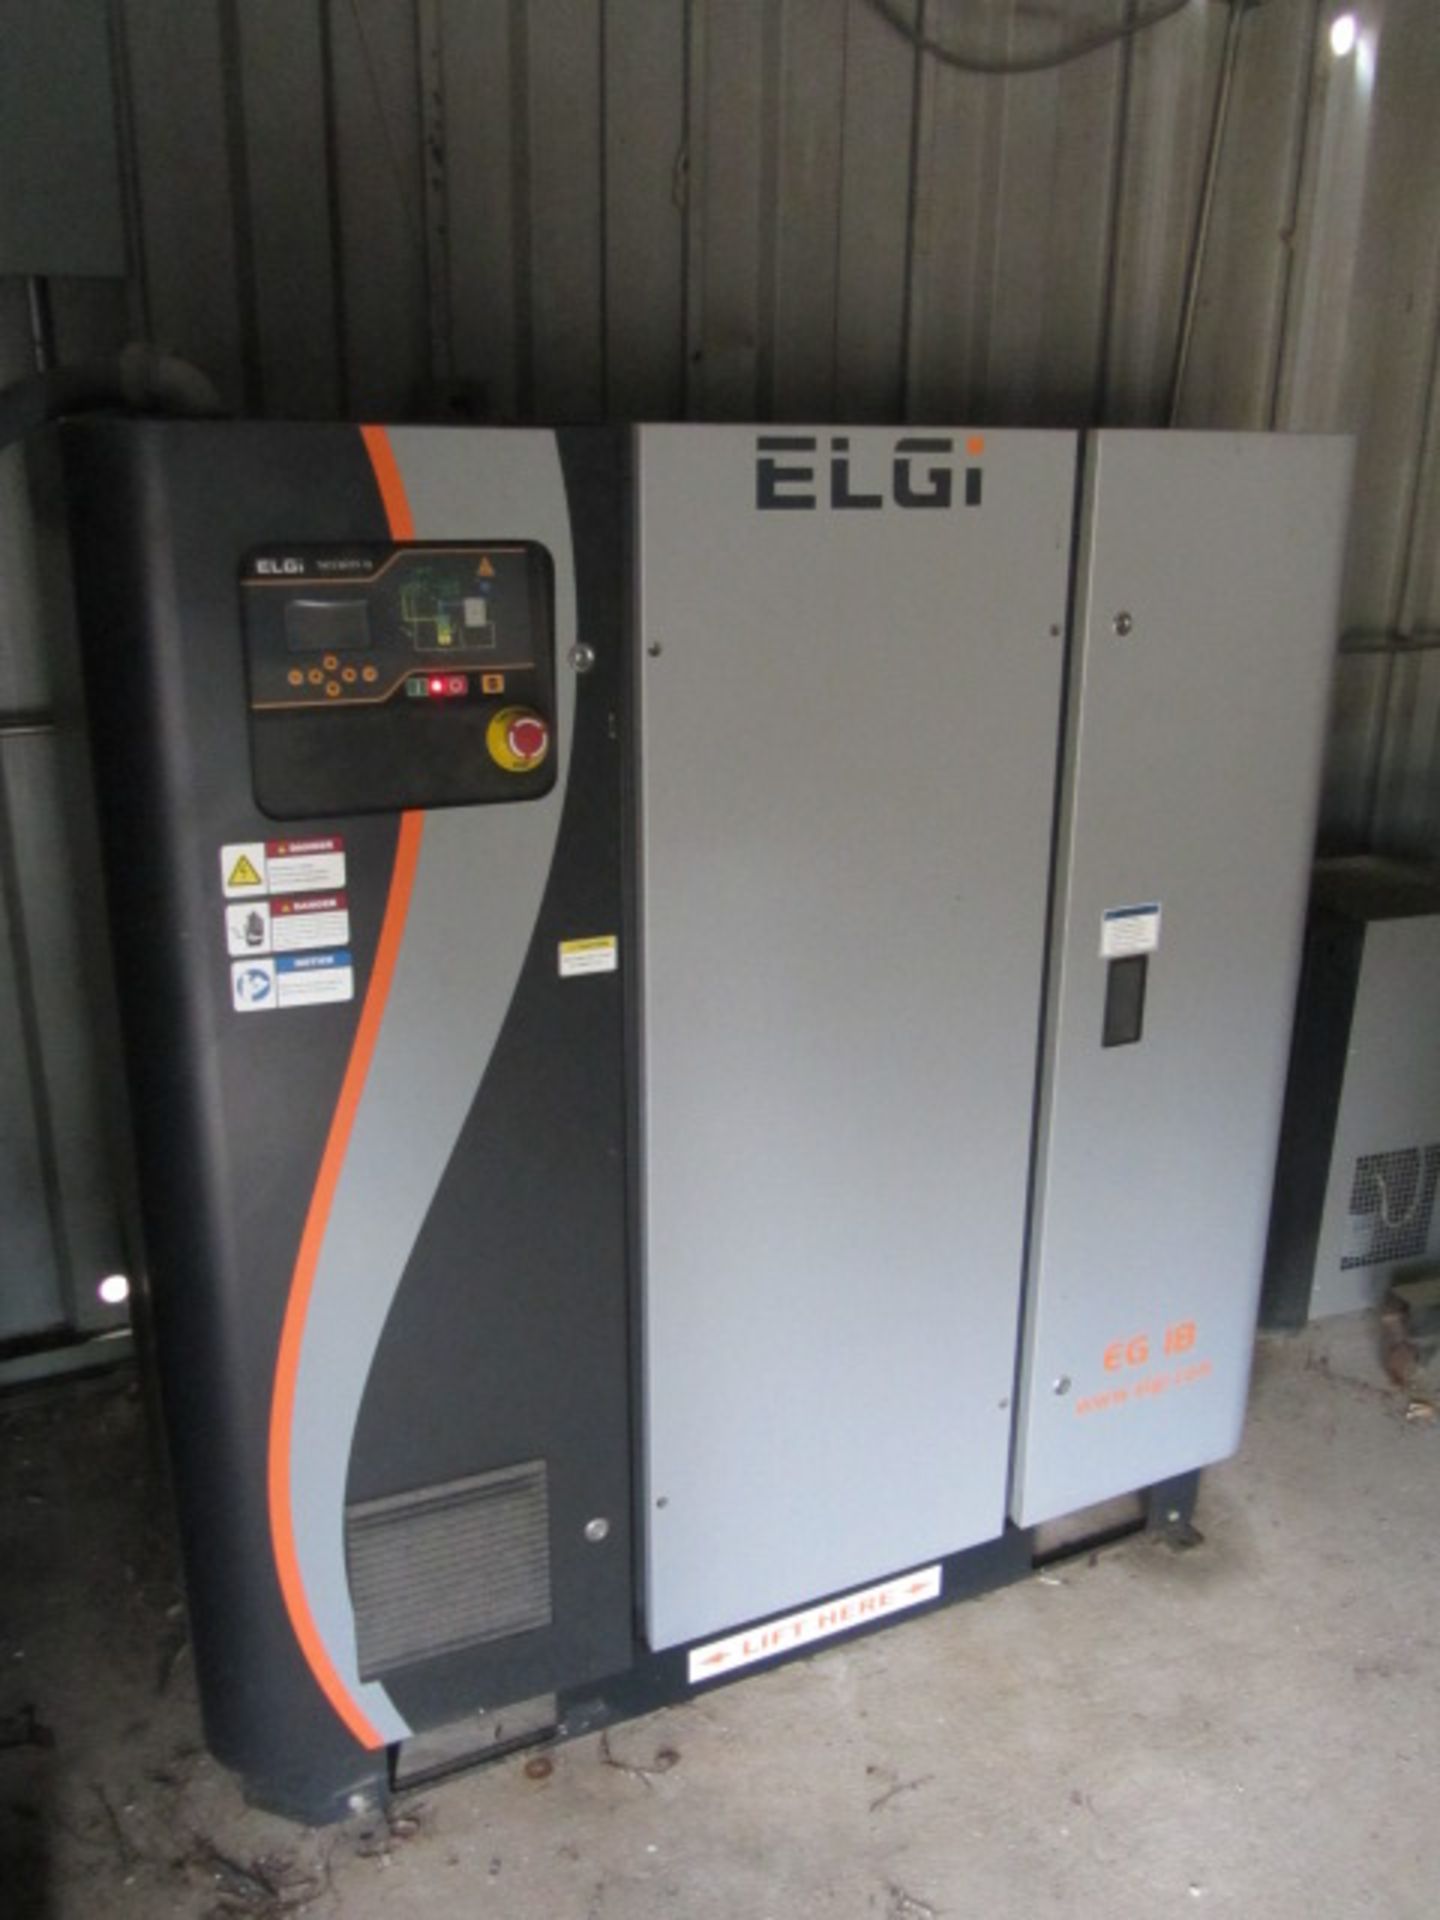 Elgi Model EG18-125 25 HP Rotary Screw Air Compressor with 125 PSI, Neuron II Controls, sn: